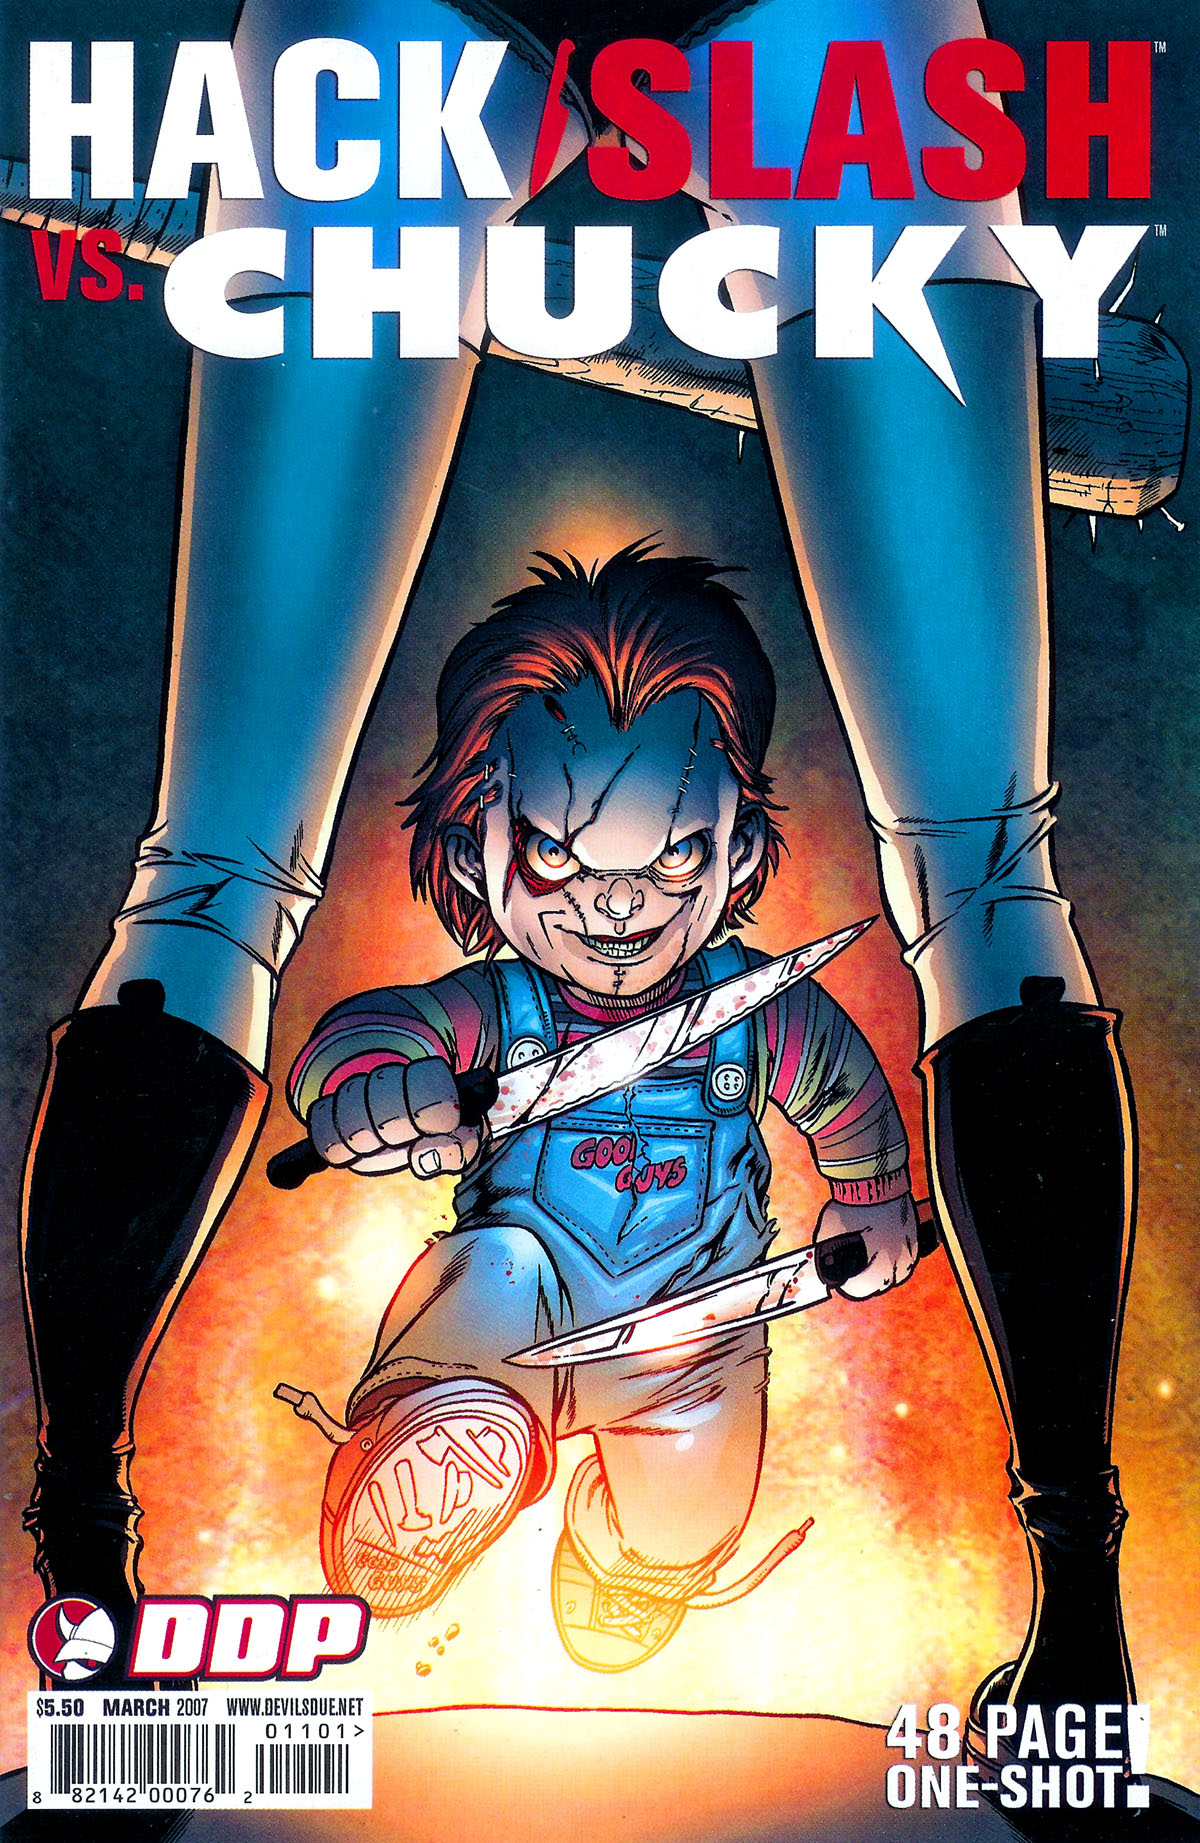 Read online Hack/Slash vs. Chucky comic -  Issue # Full - 1